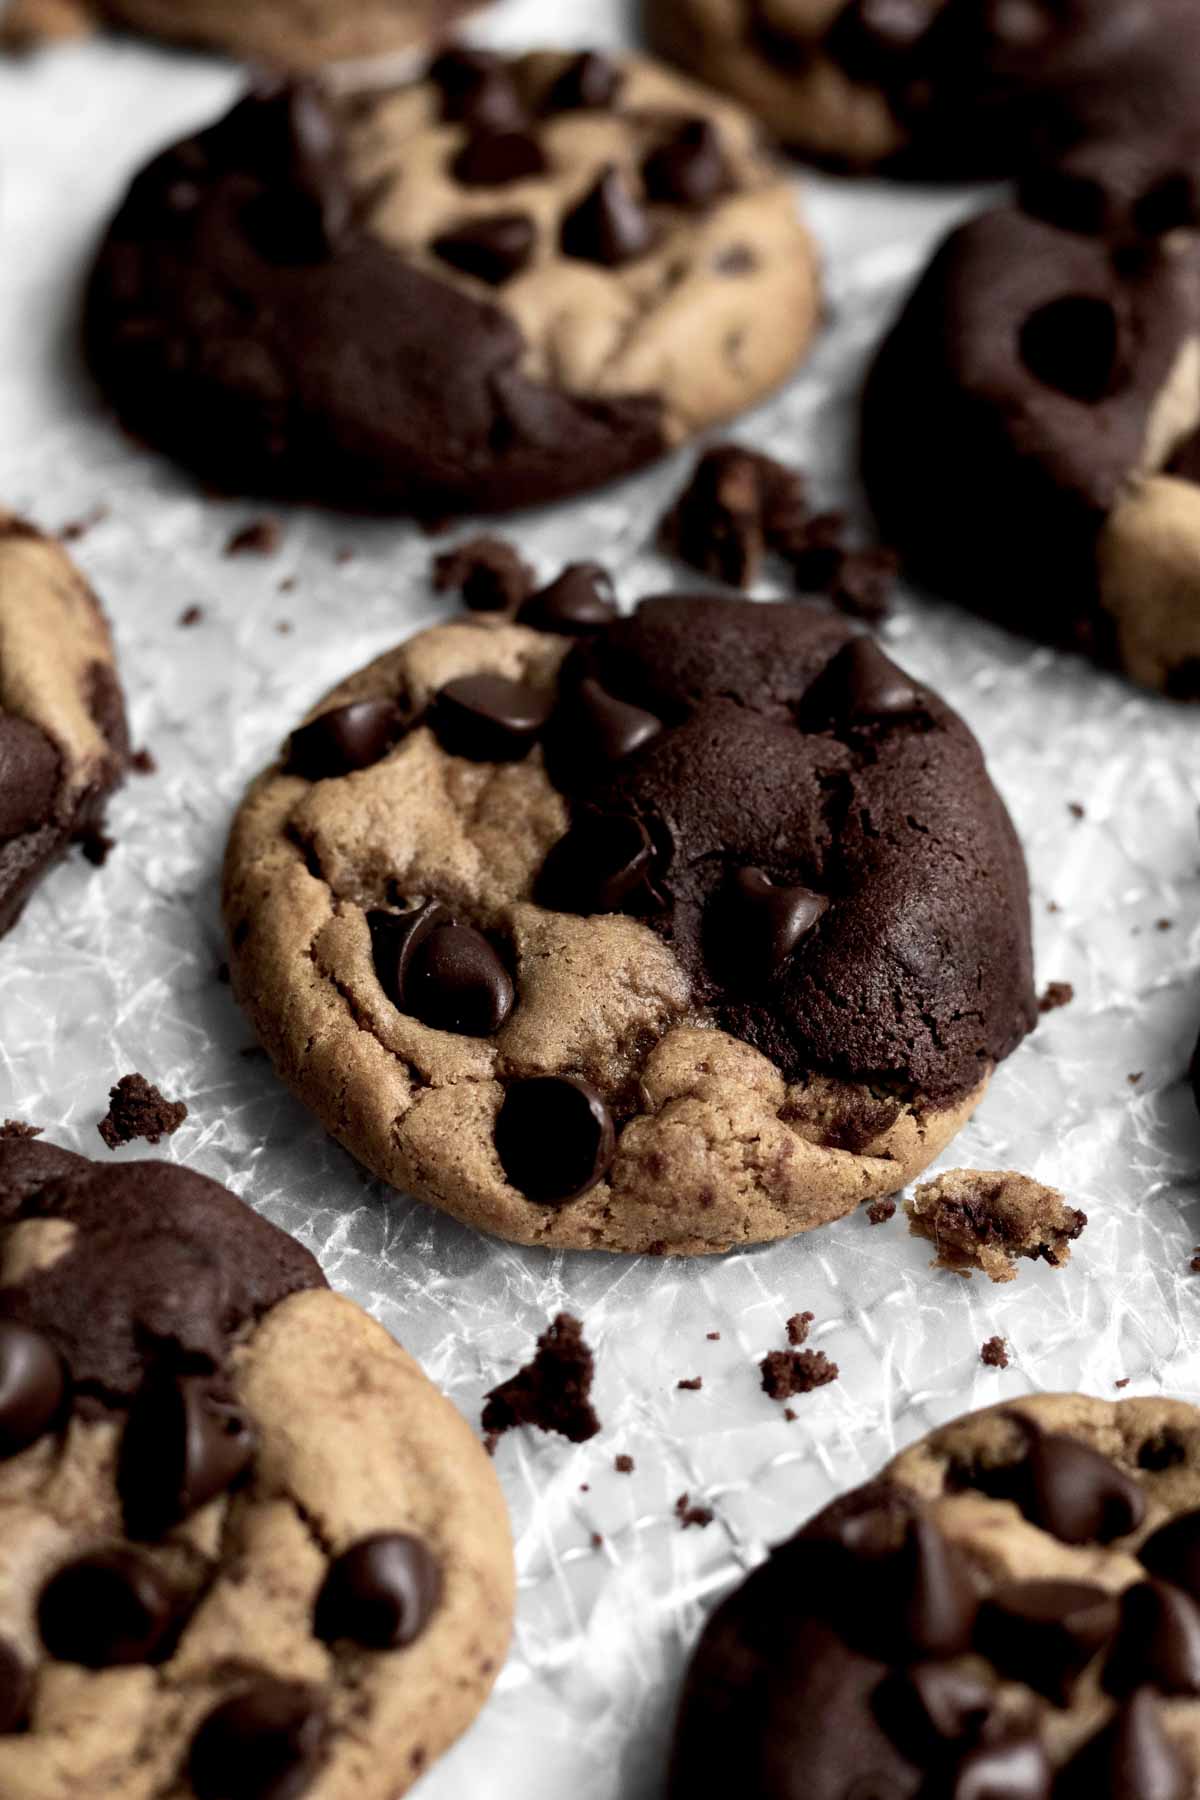 Baked harmoniously, Brookie Cookies look like a yin yang of flavor.